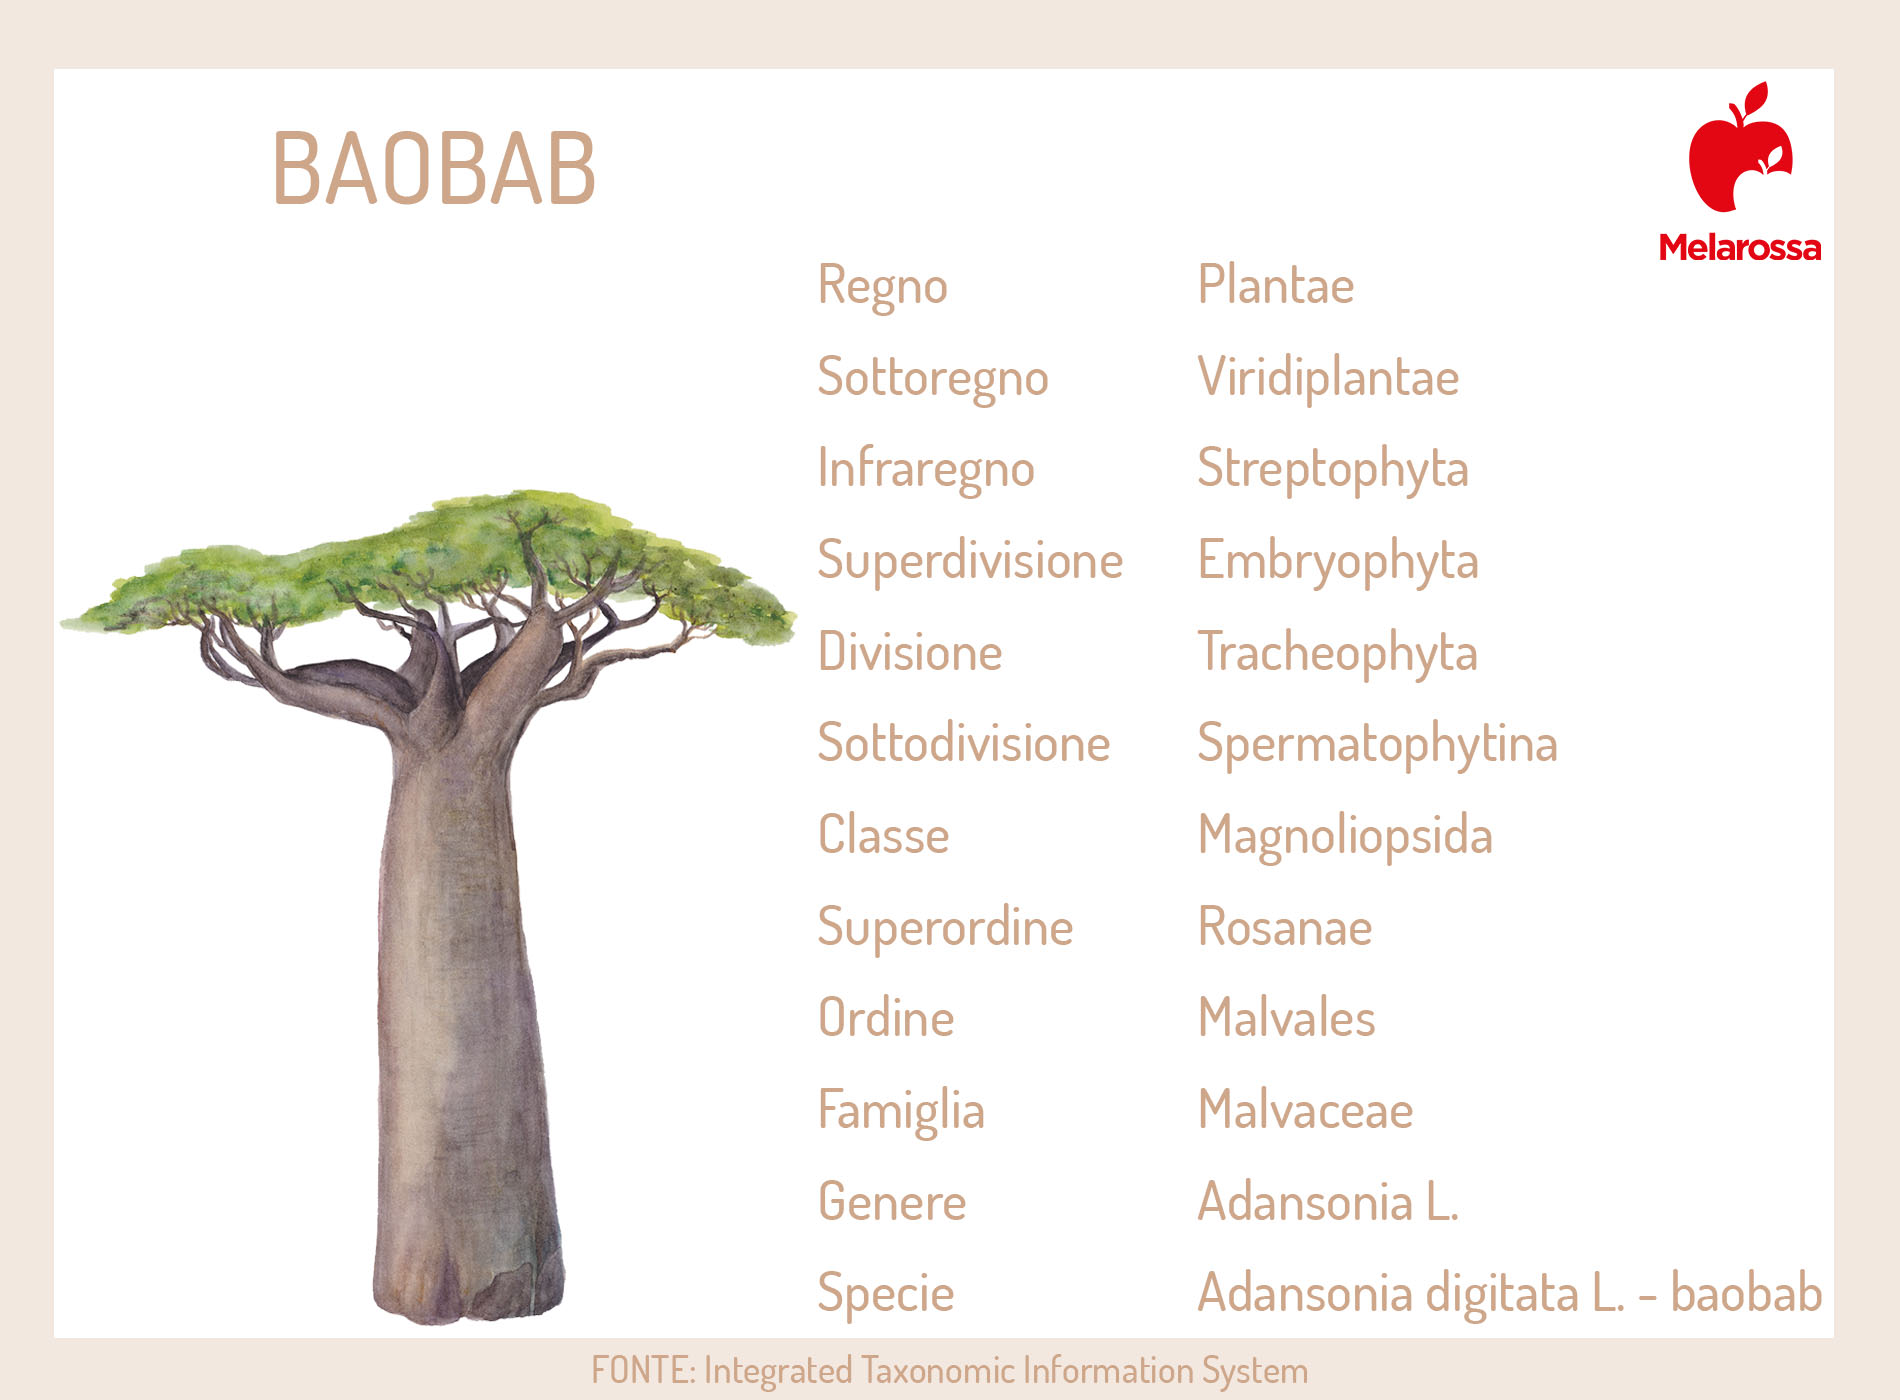 Botanica del baobab